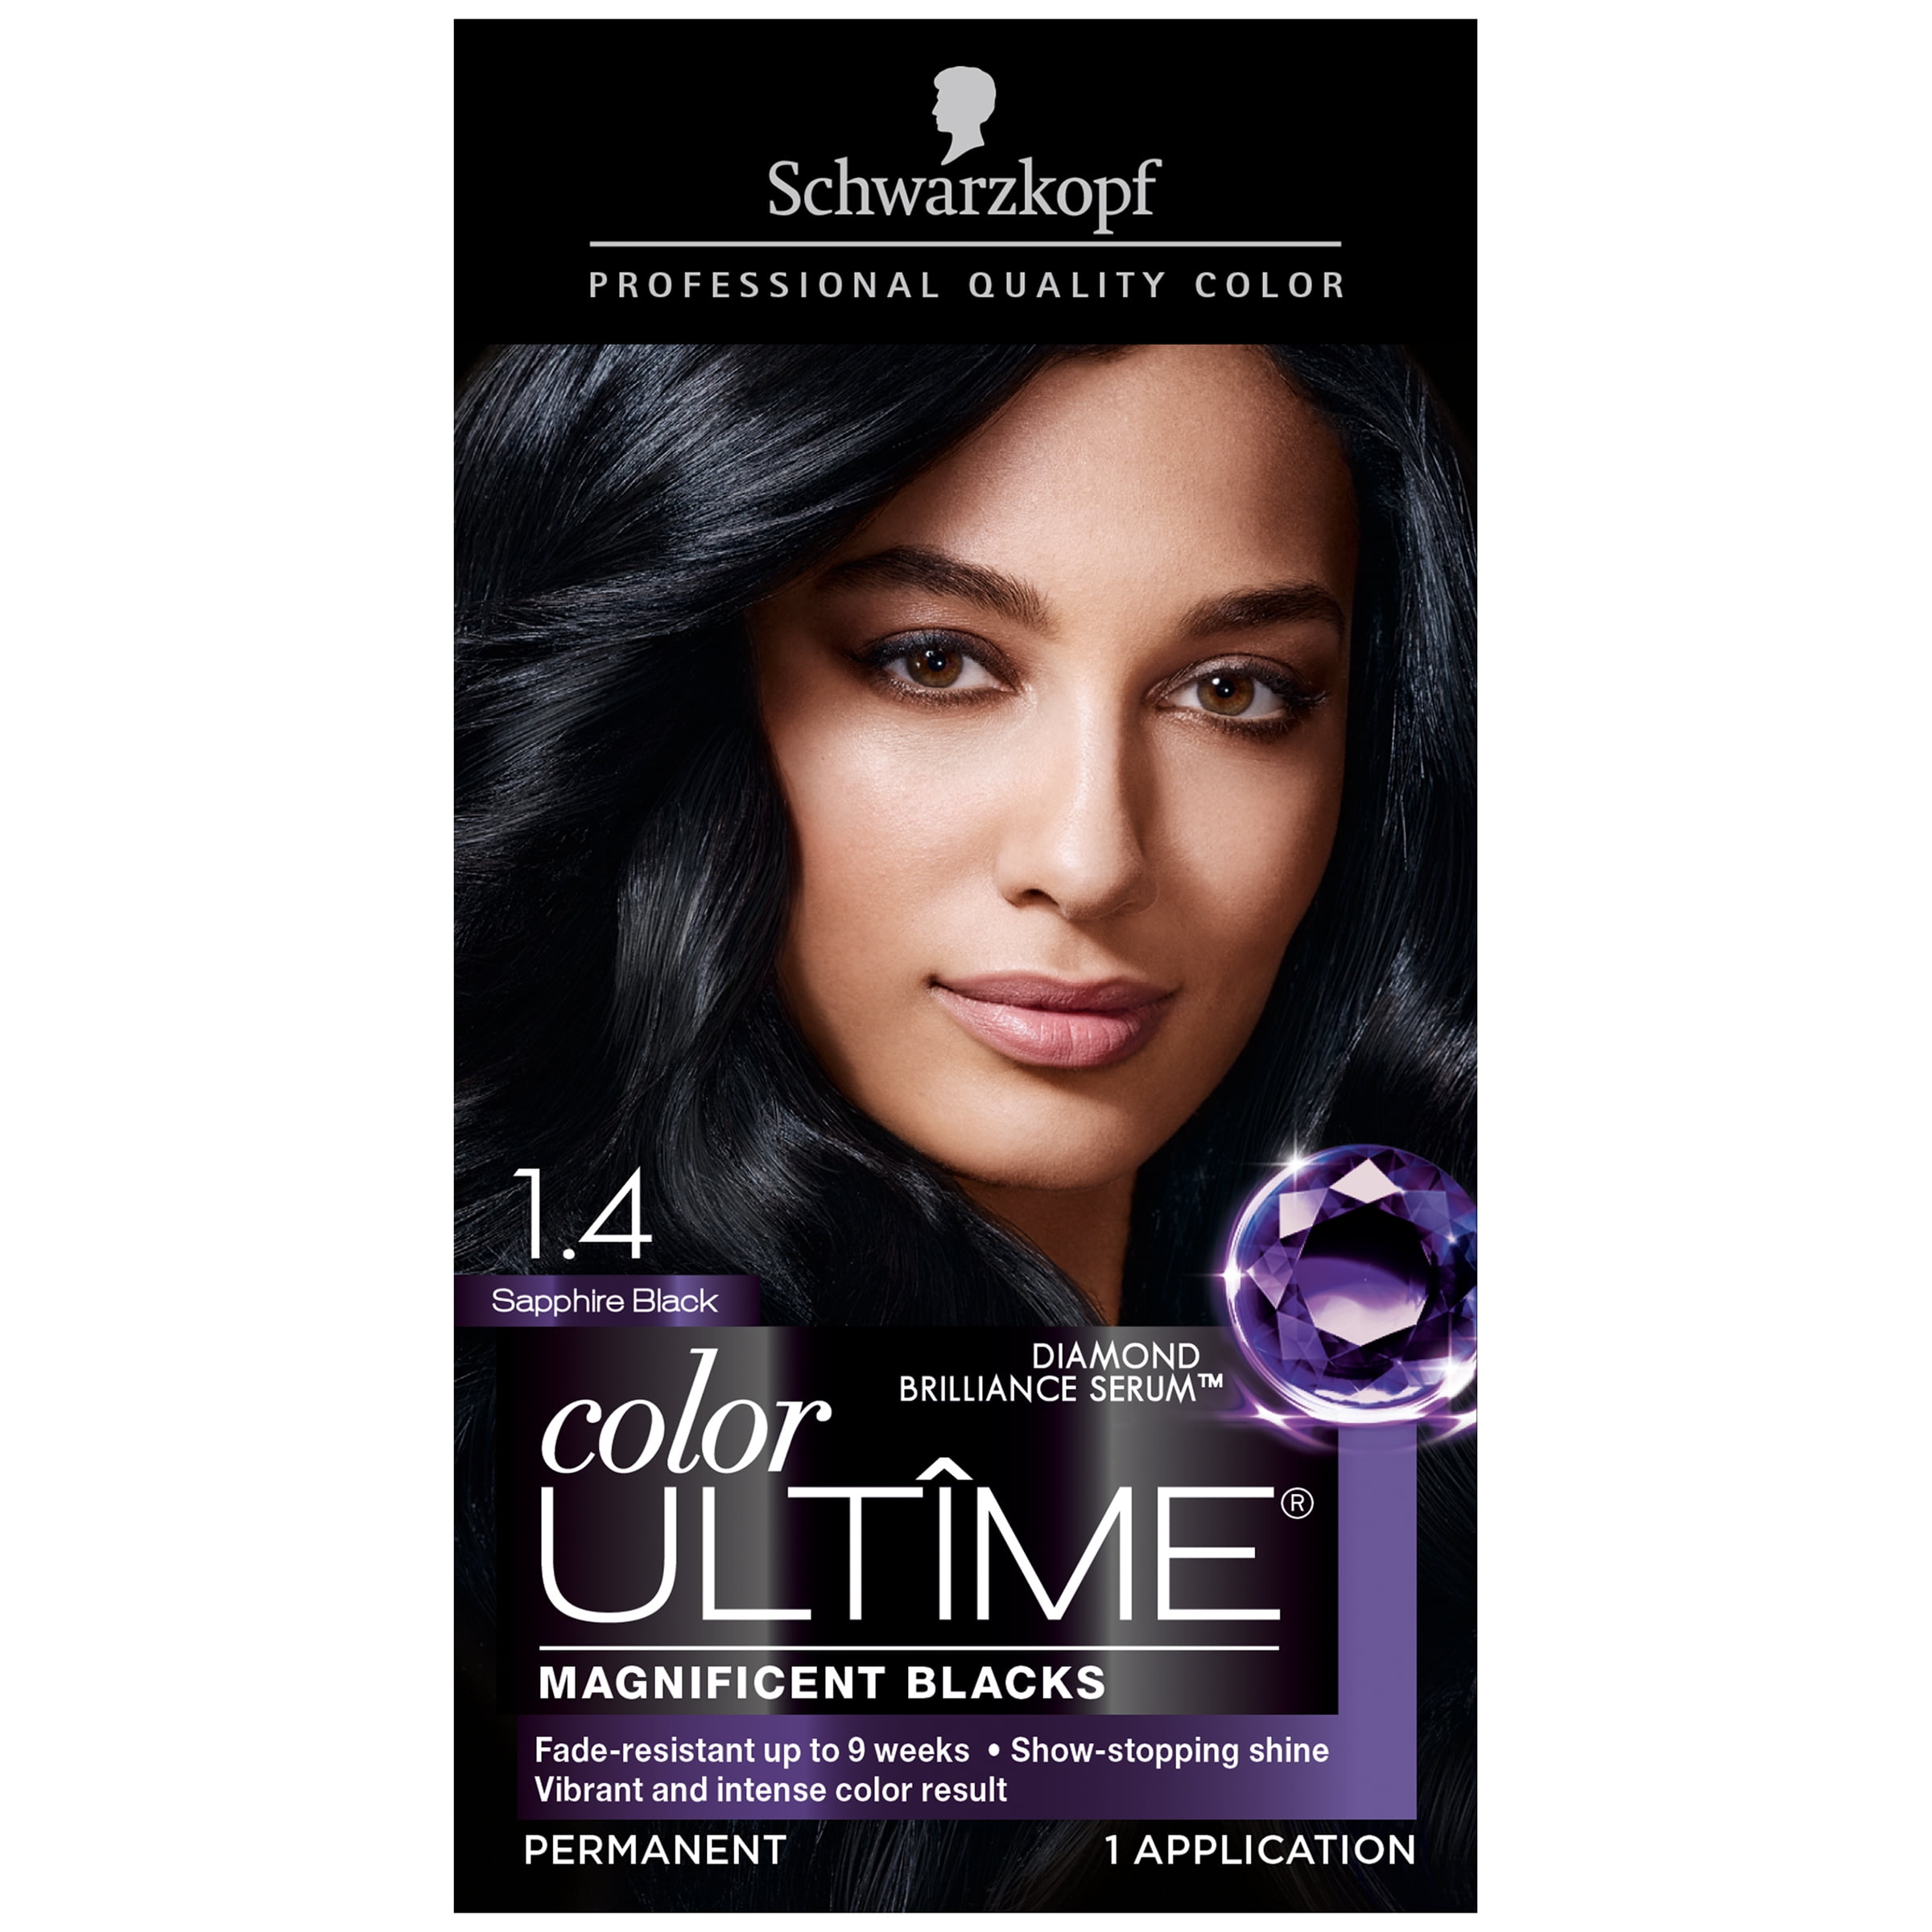 Schwarzkopf Color Ultime Permanent Hair Color Cream, 1.4 